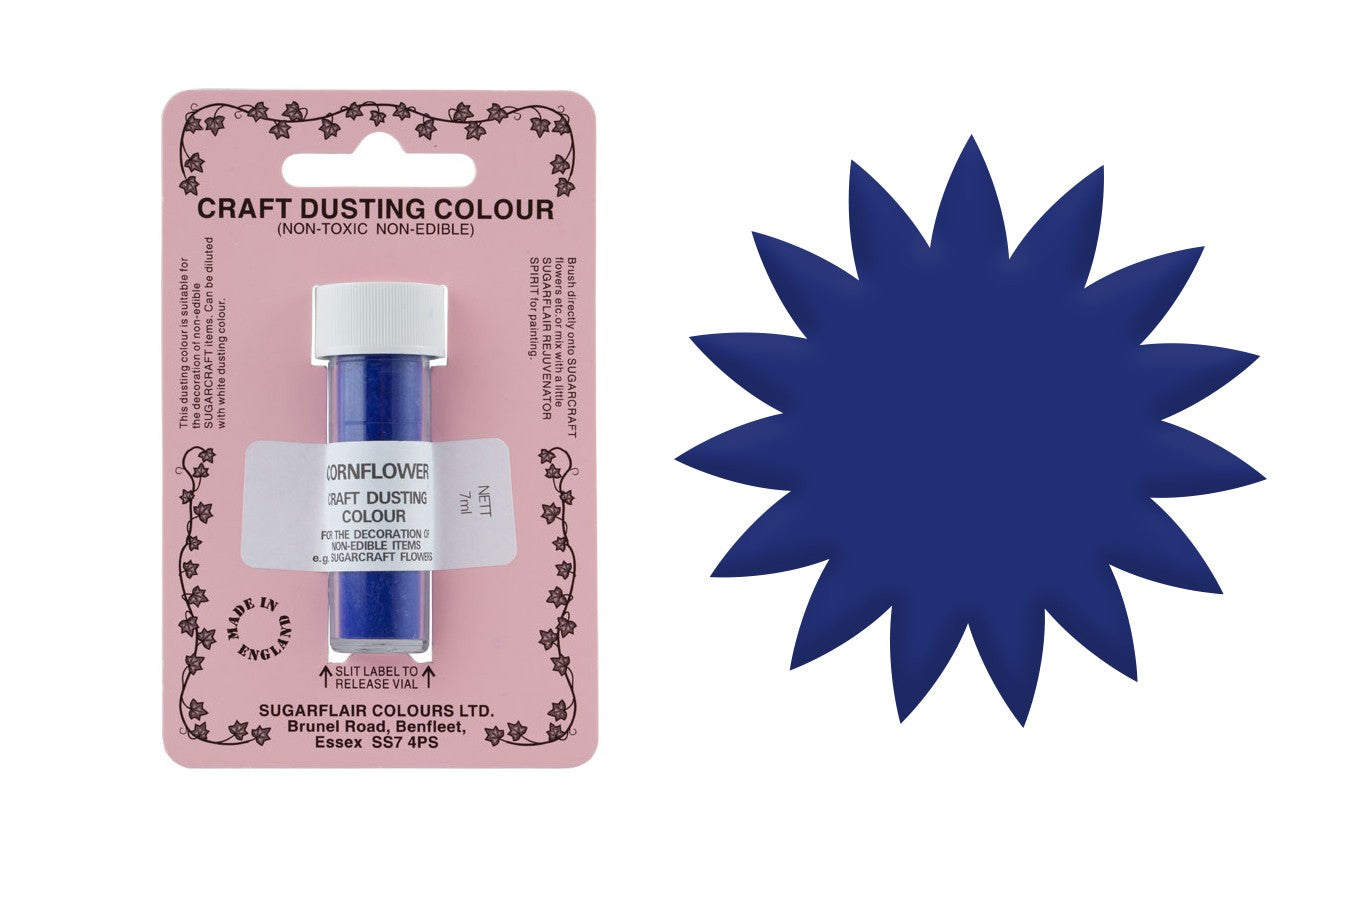 Sugarflair Craft Dusting Colour Powder: Non-Toxic, Non-Edible Cornflower Blue - The Cooks Cupboard Ltd